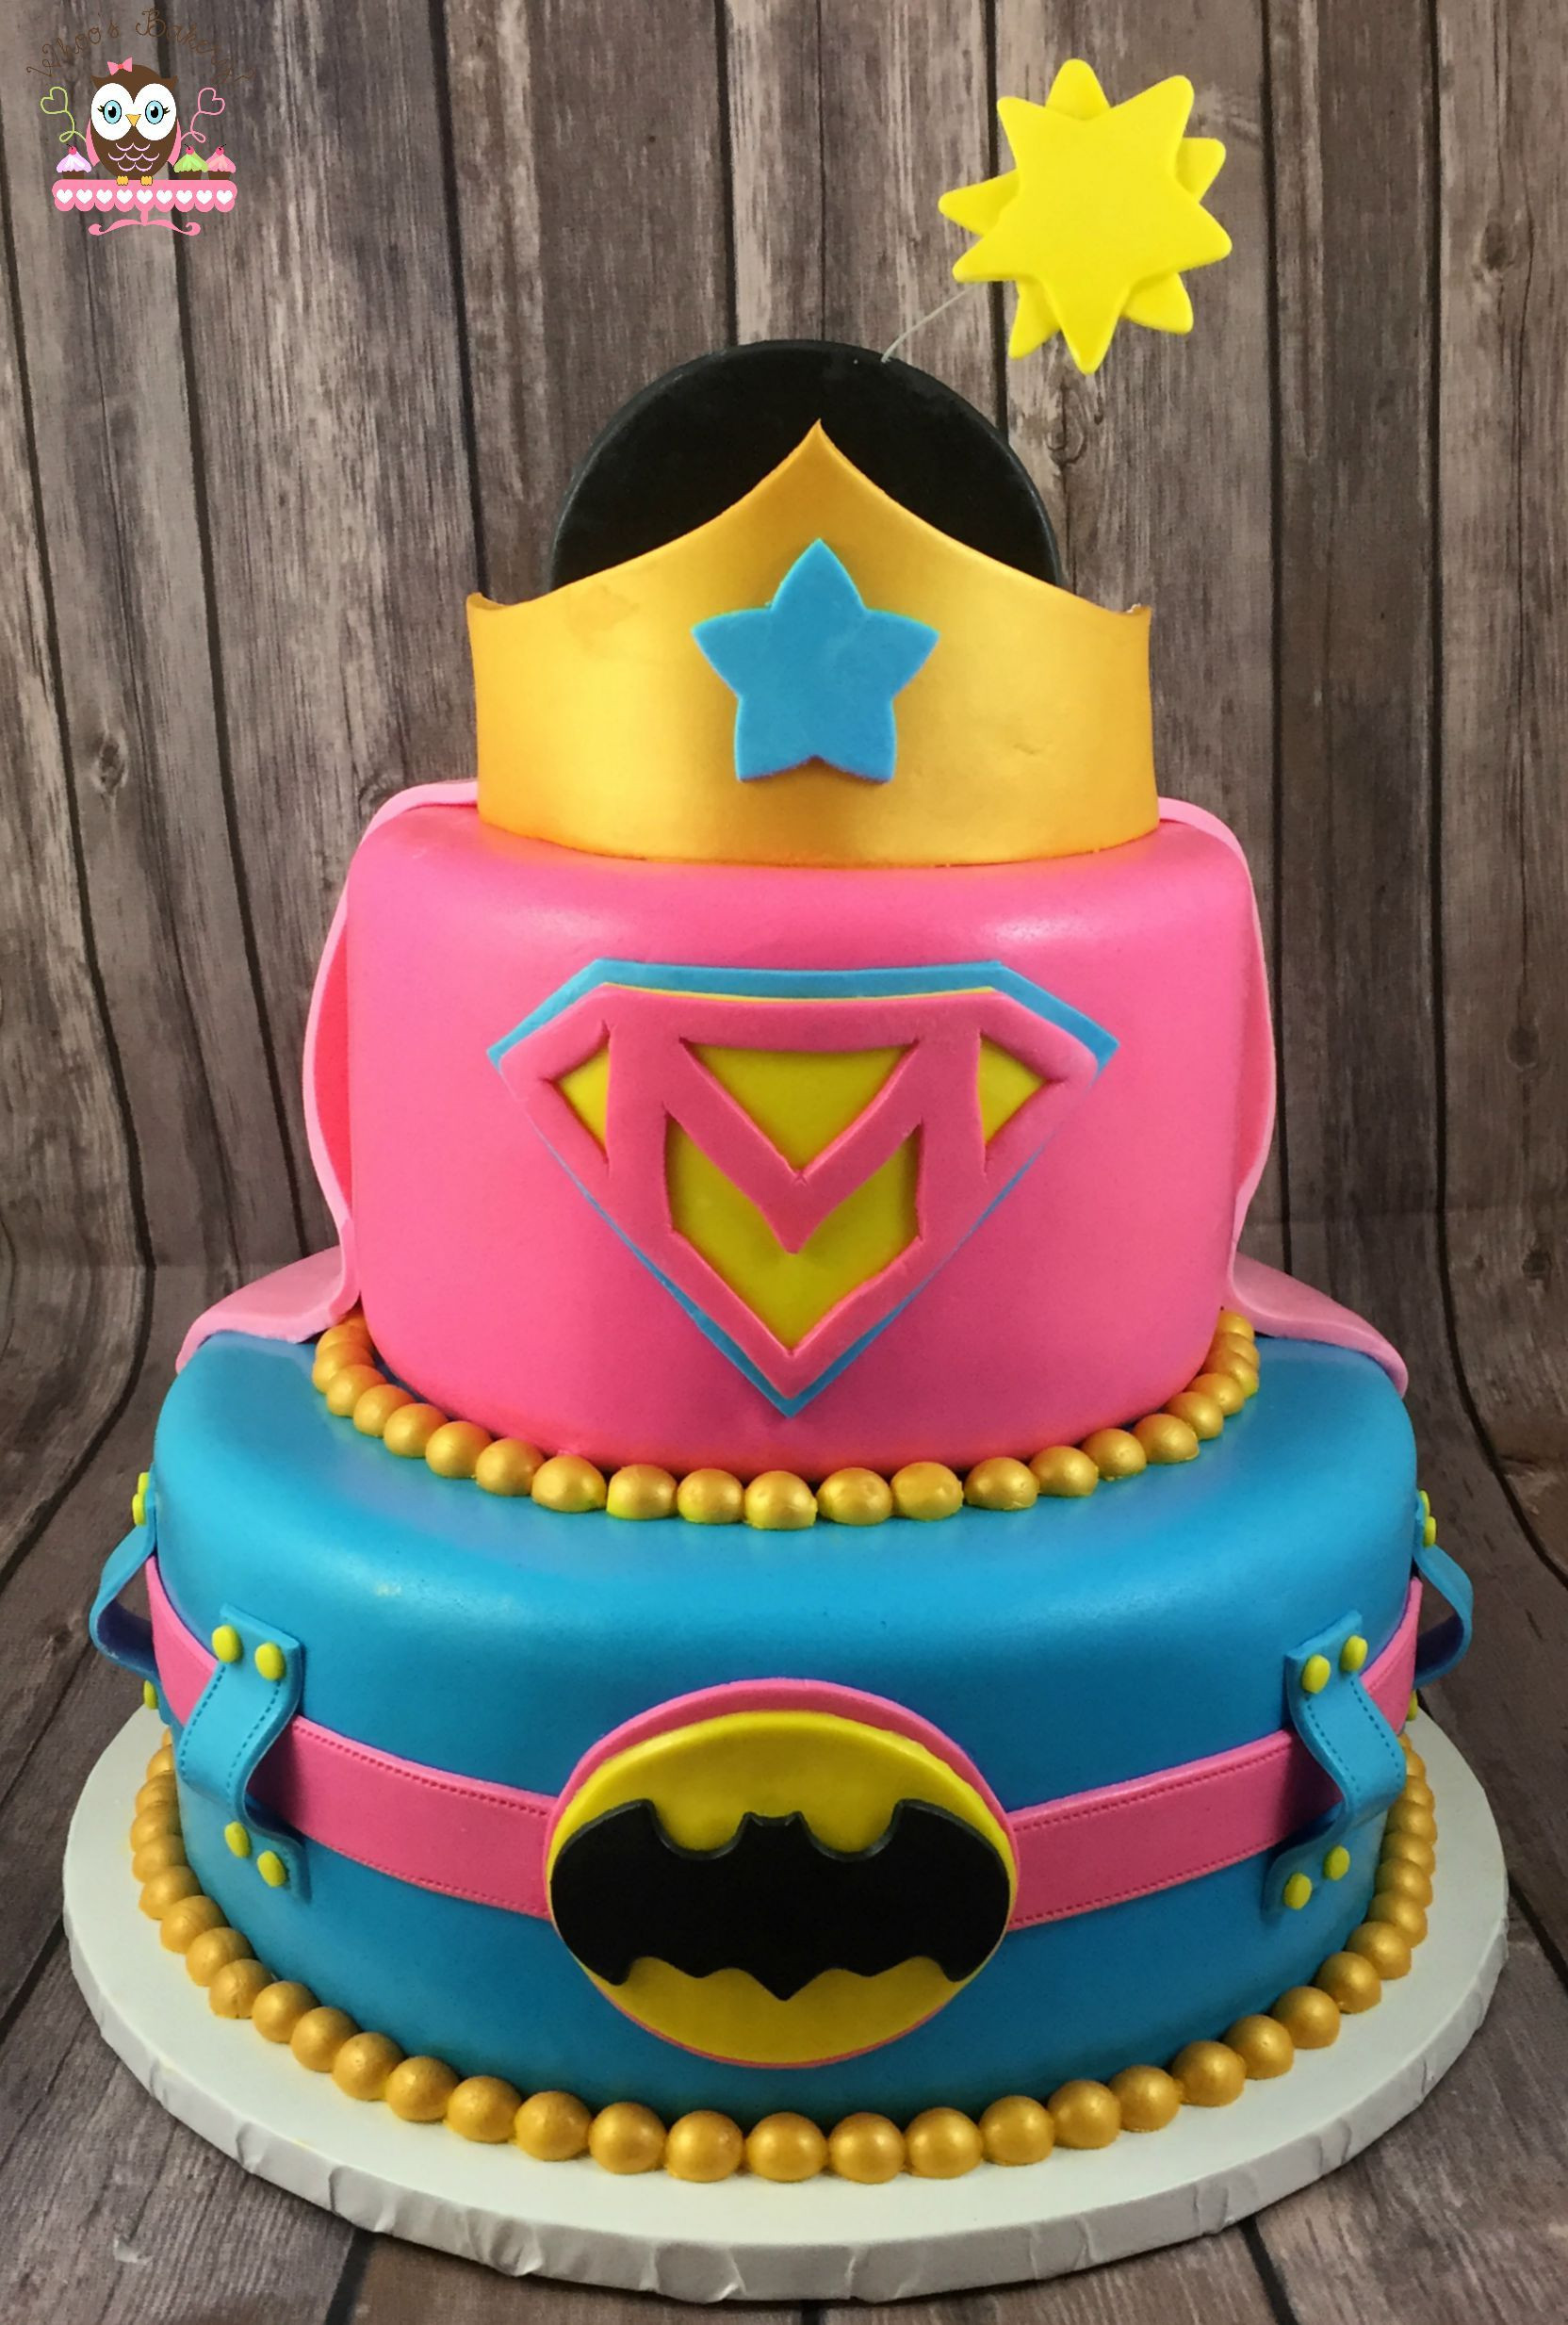 Best ideas about Super Hero Birthday Cake
. Save or Pin Superhero cake Girl Superhero Cake Pink superhero Now.